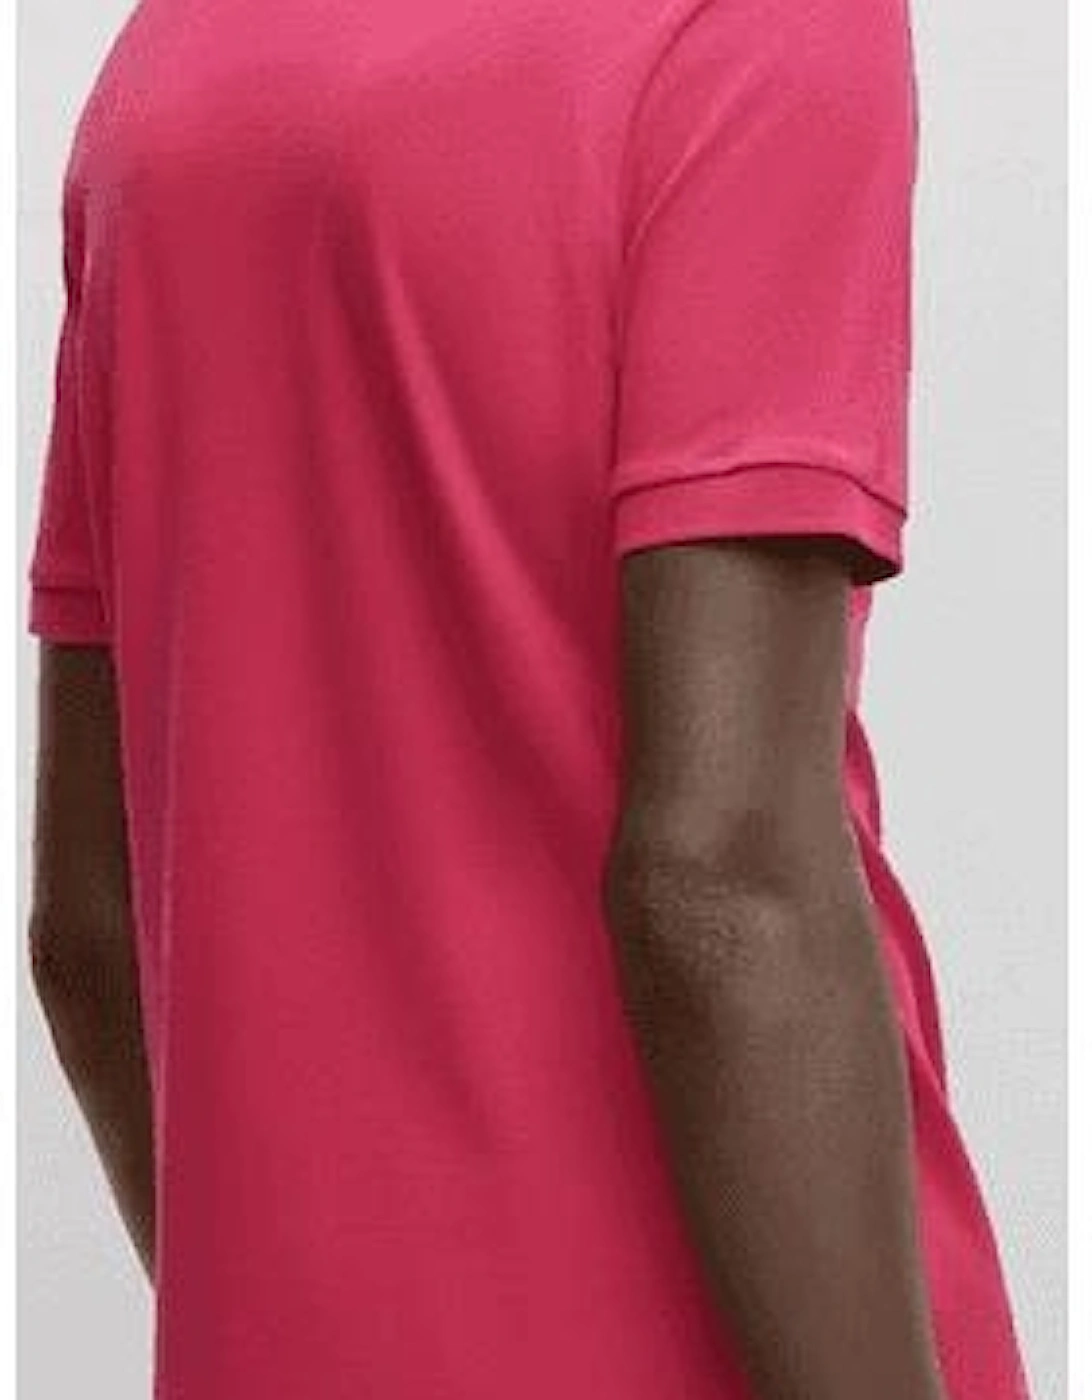 Passenger Patch Logo Cotton Pink Polo Shirt